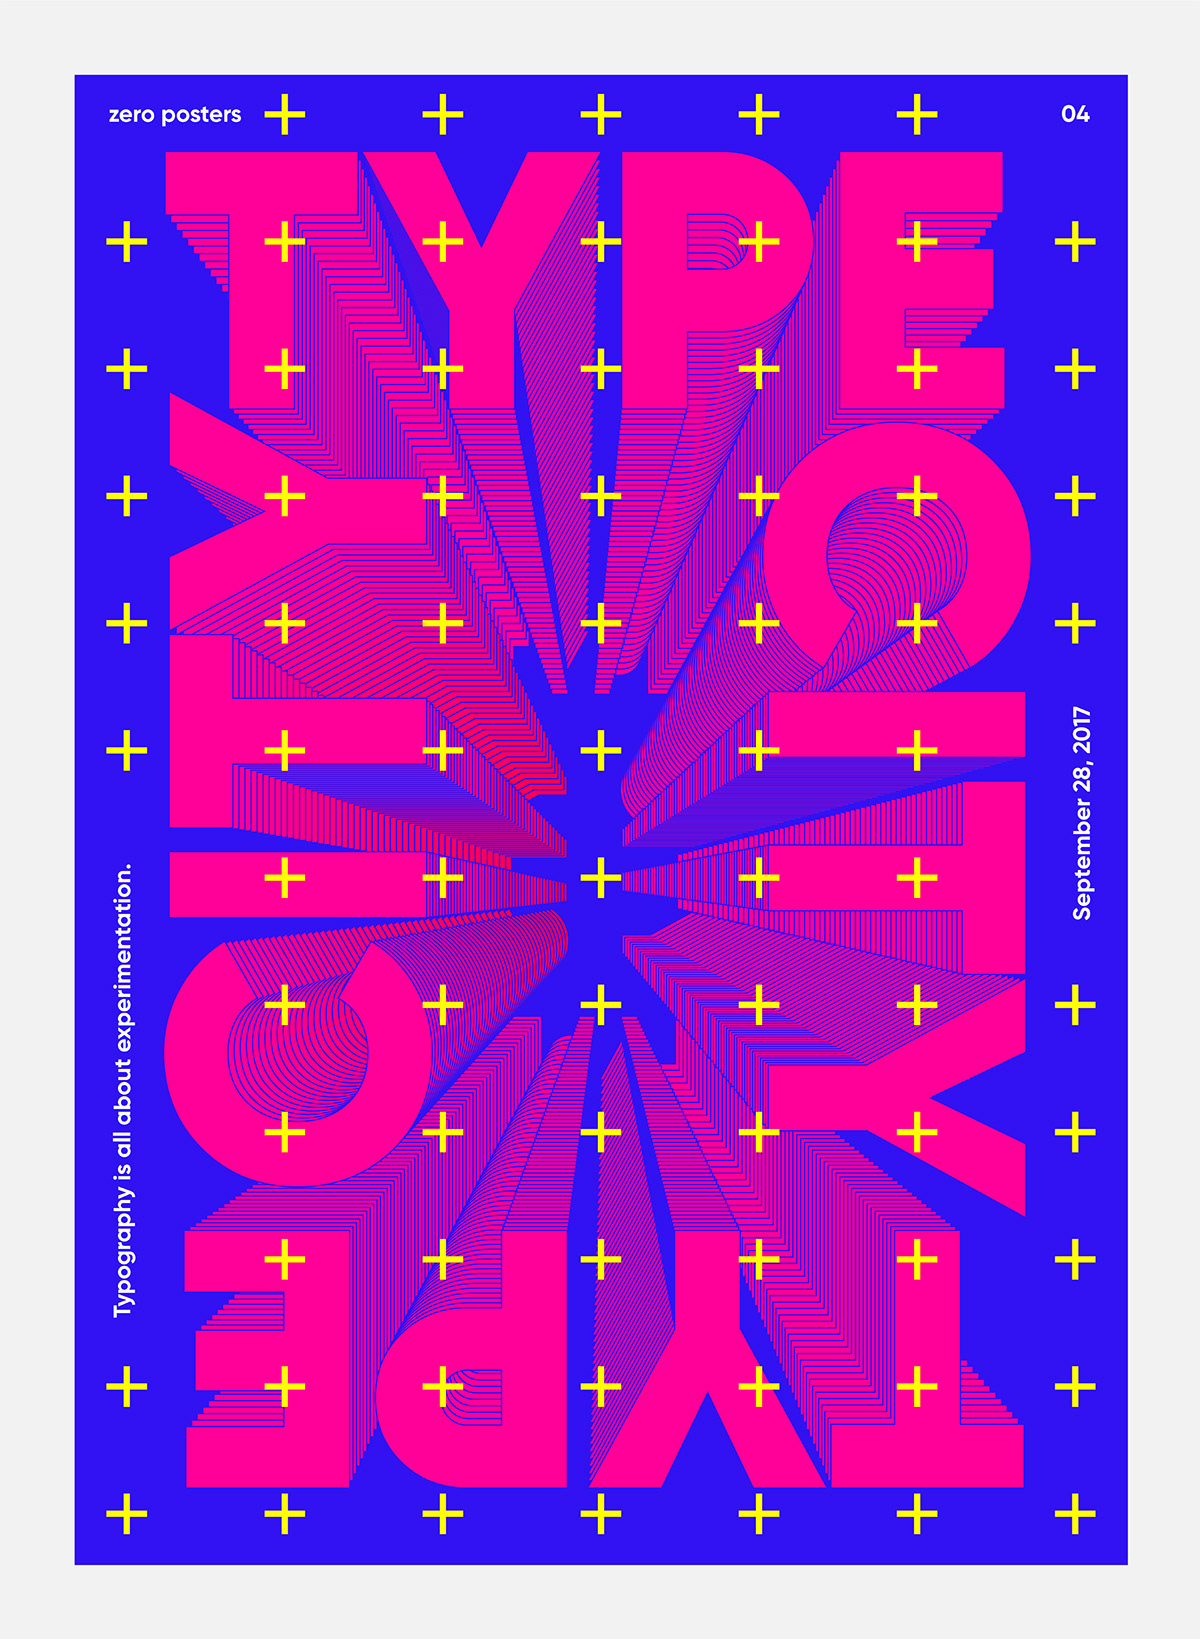 gridsystem poster Layout abstract modern digitalart art swiss Exhibition 